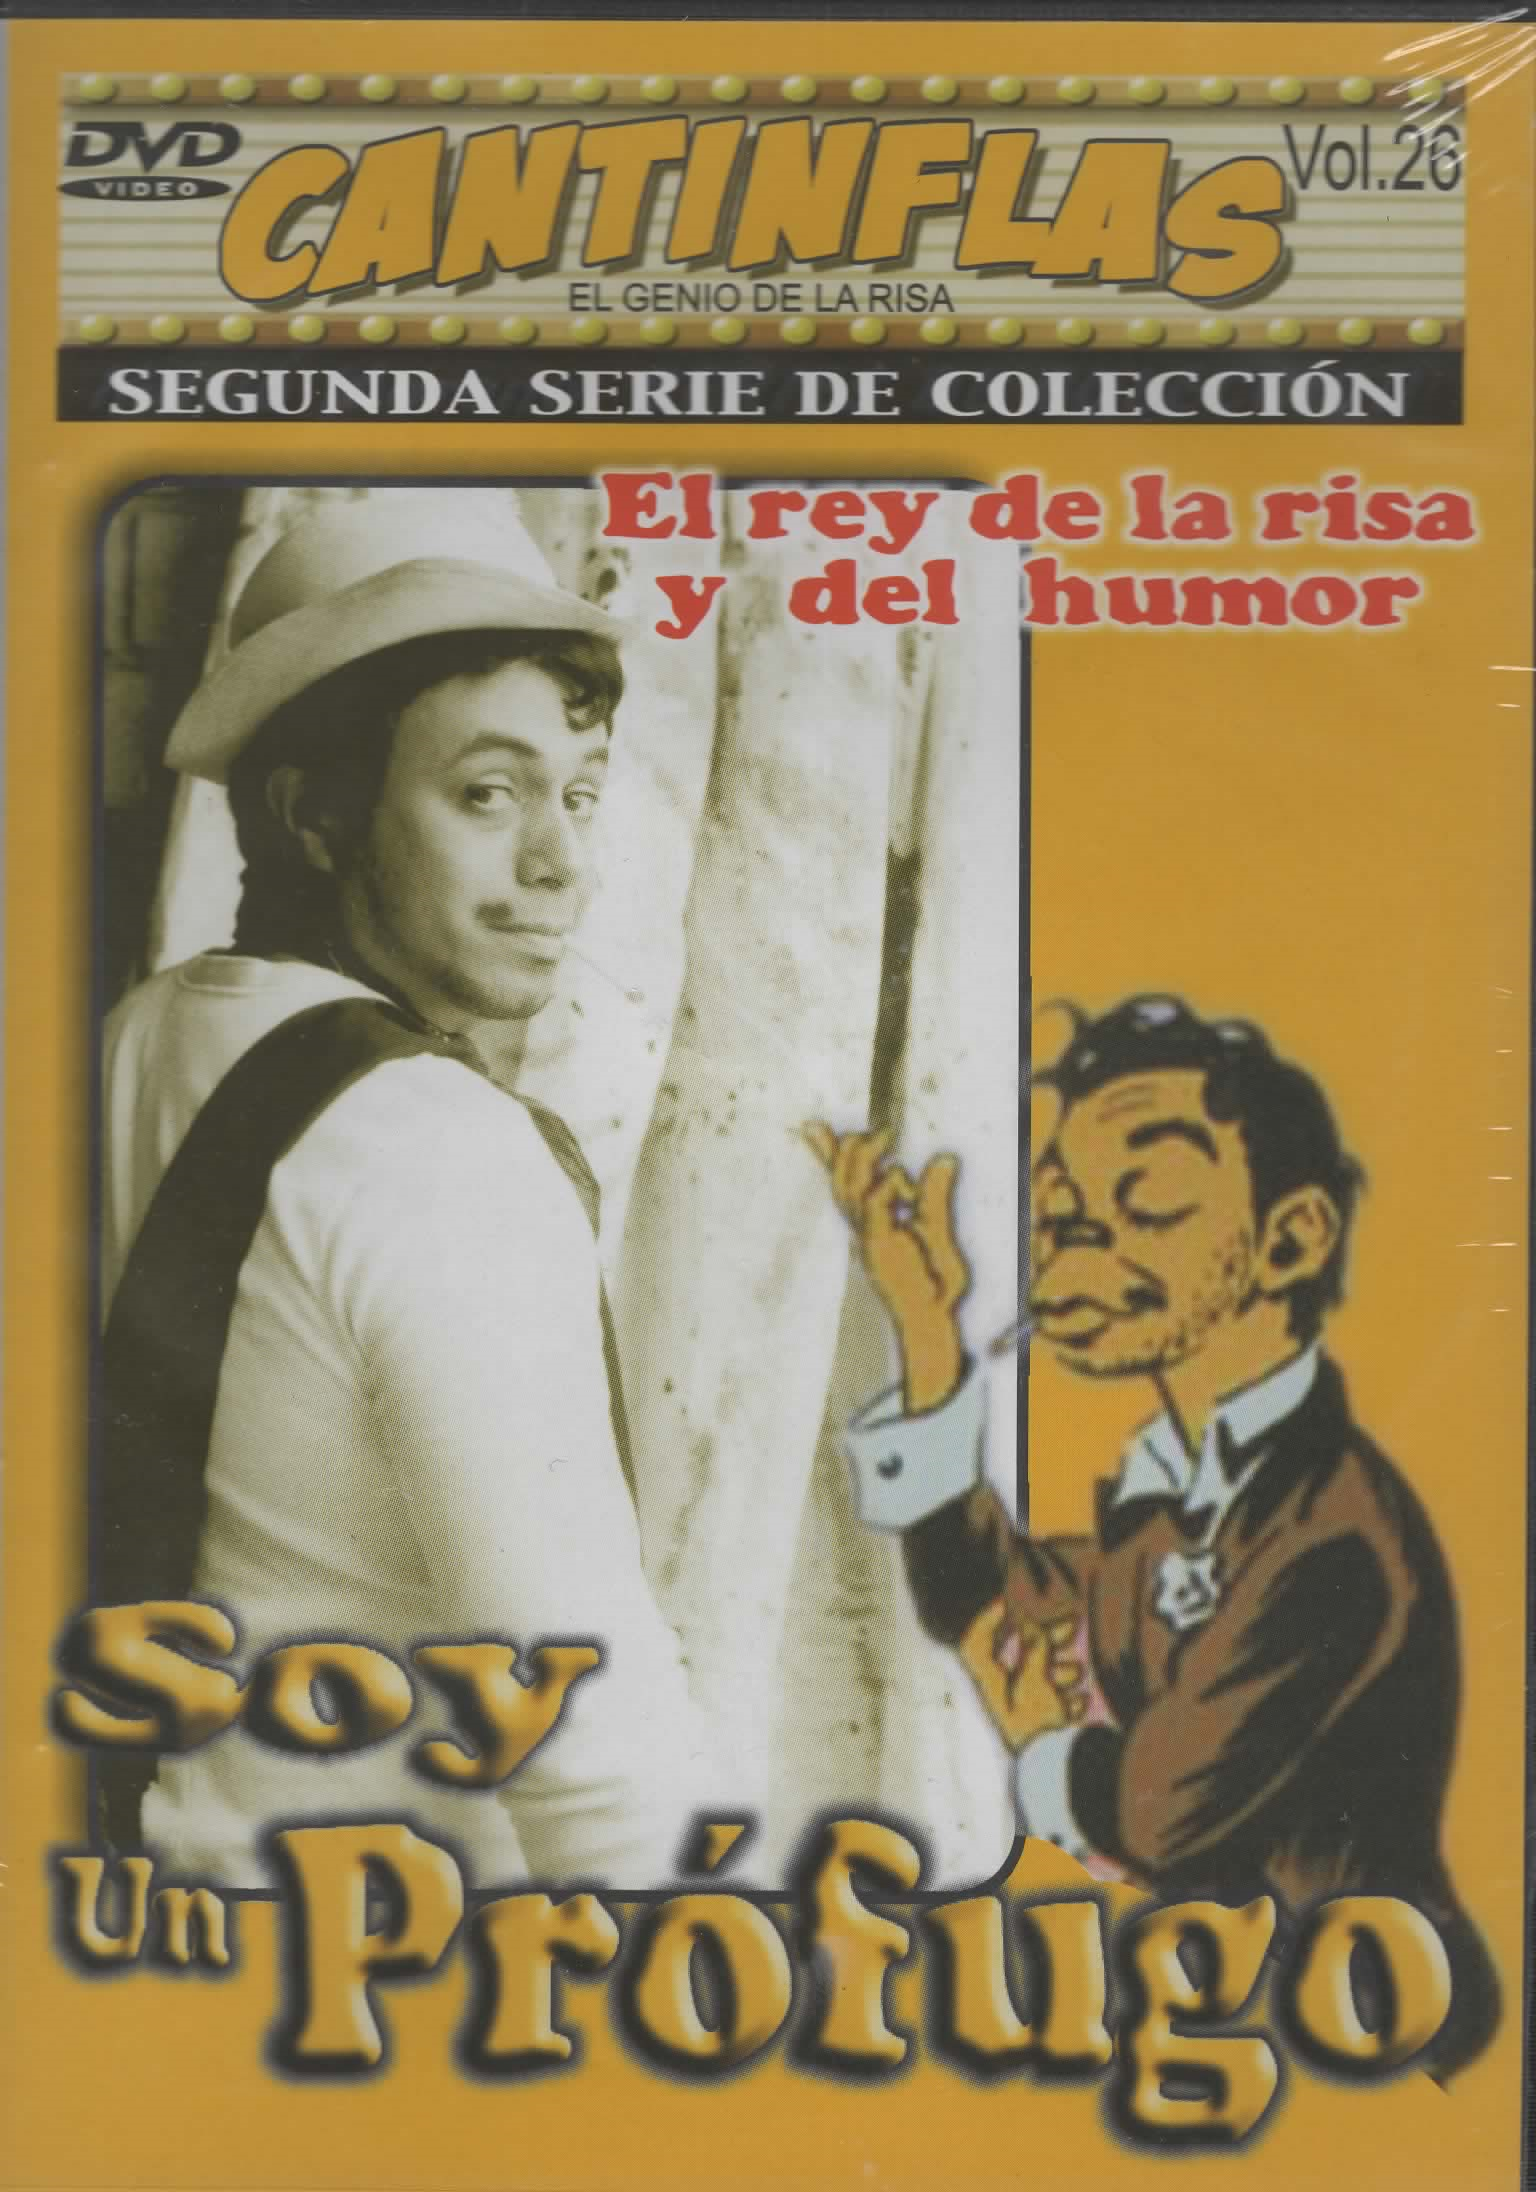 DVD Cantinflas - Soy un prófugo Vol. 26